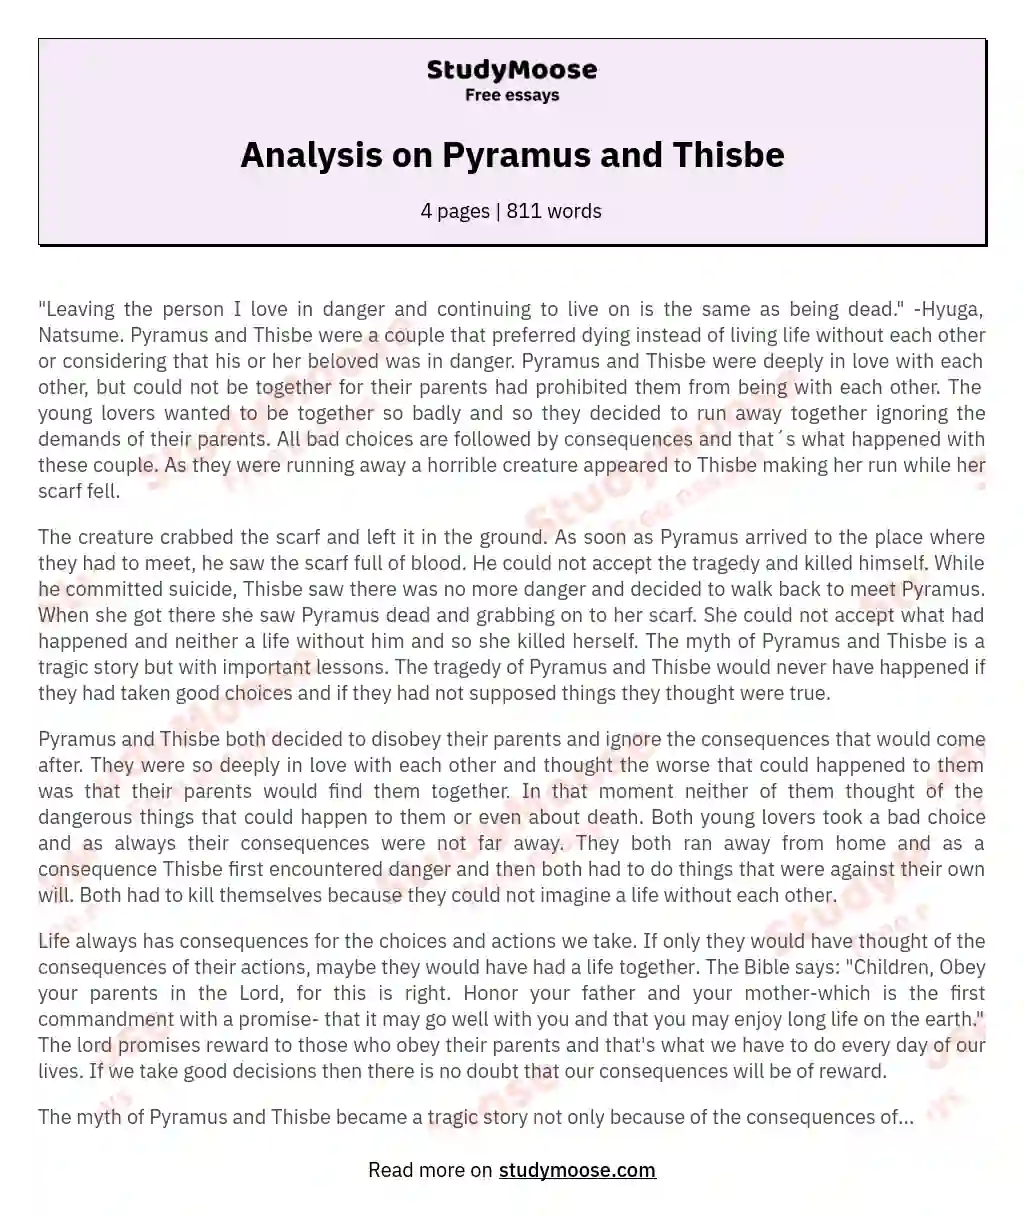 Analysis on Pyramus and Thisbe essay